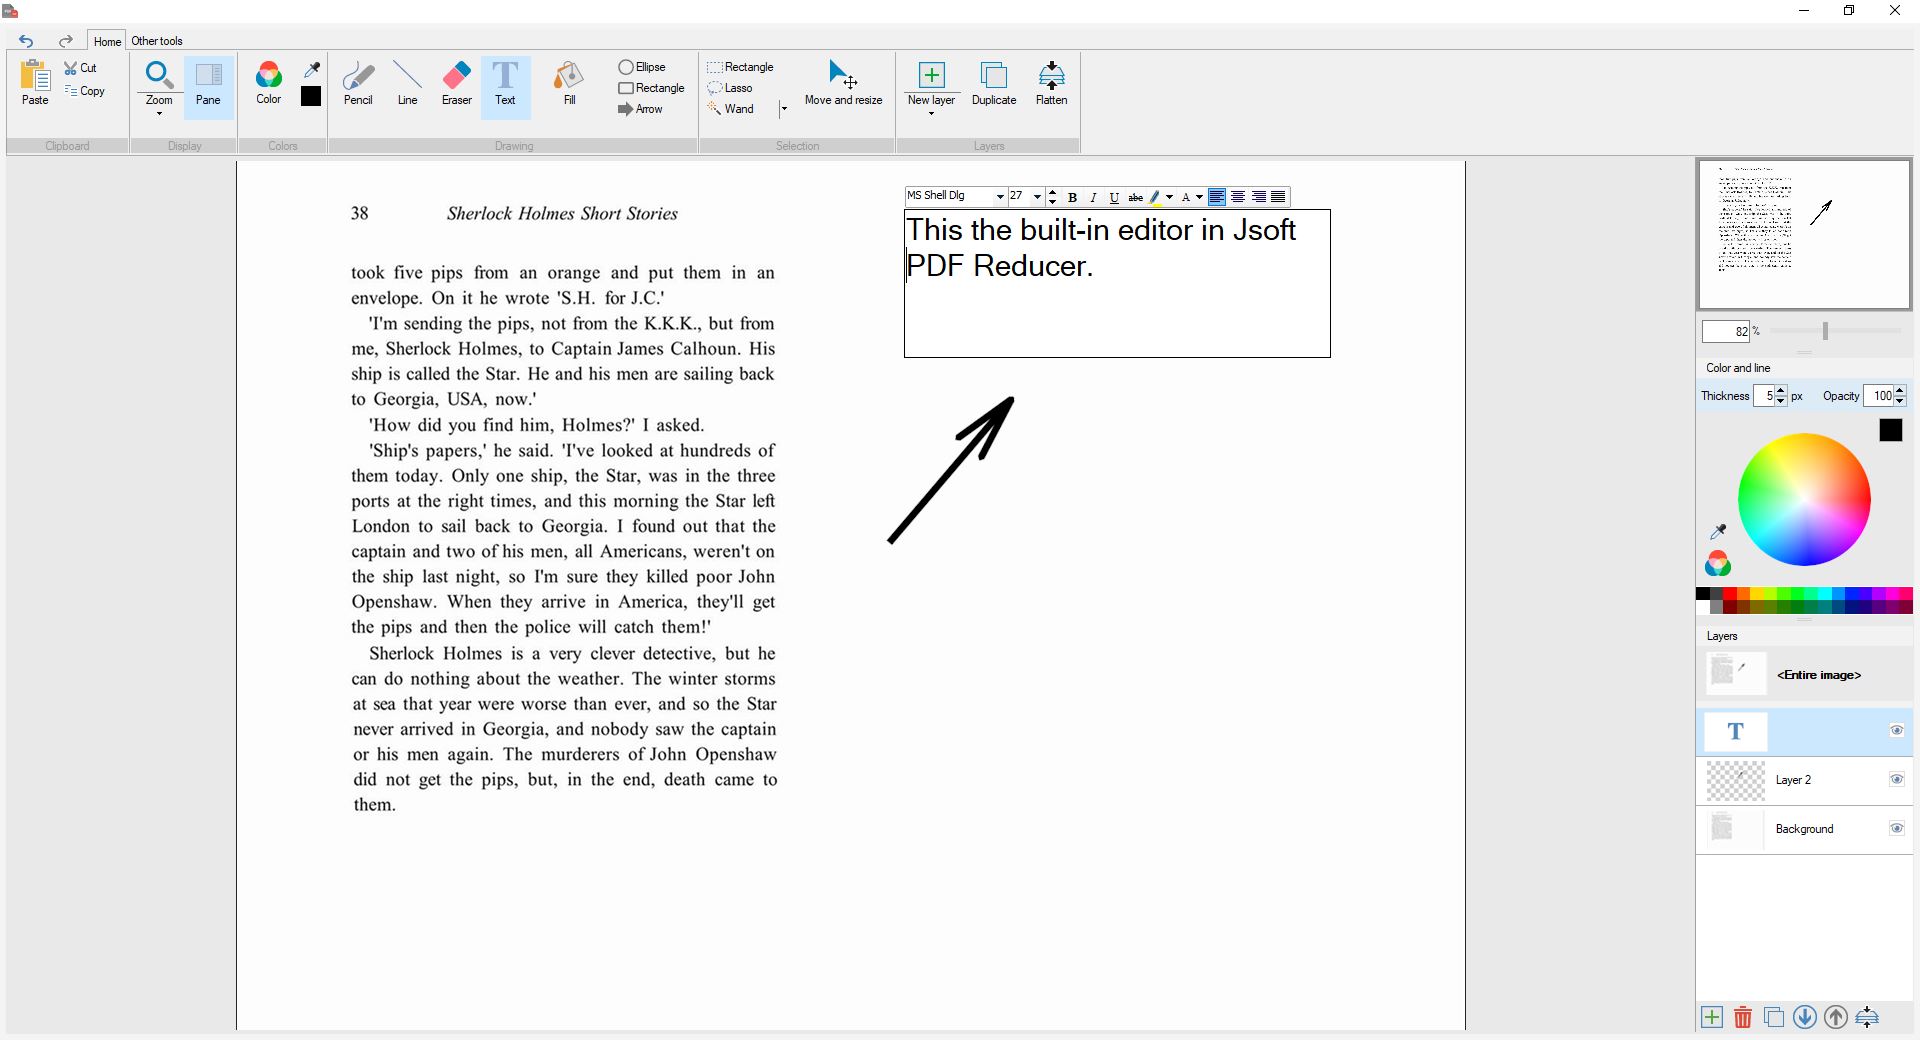 Jsoft PDF Reducer editor